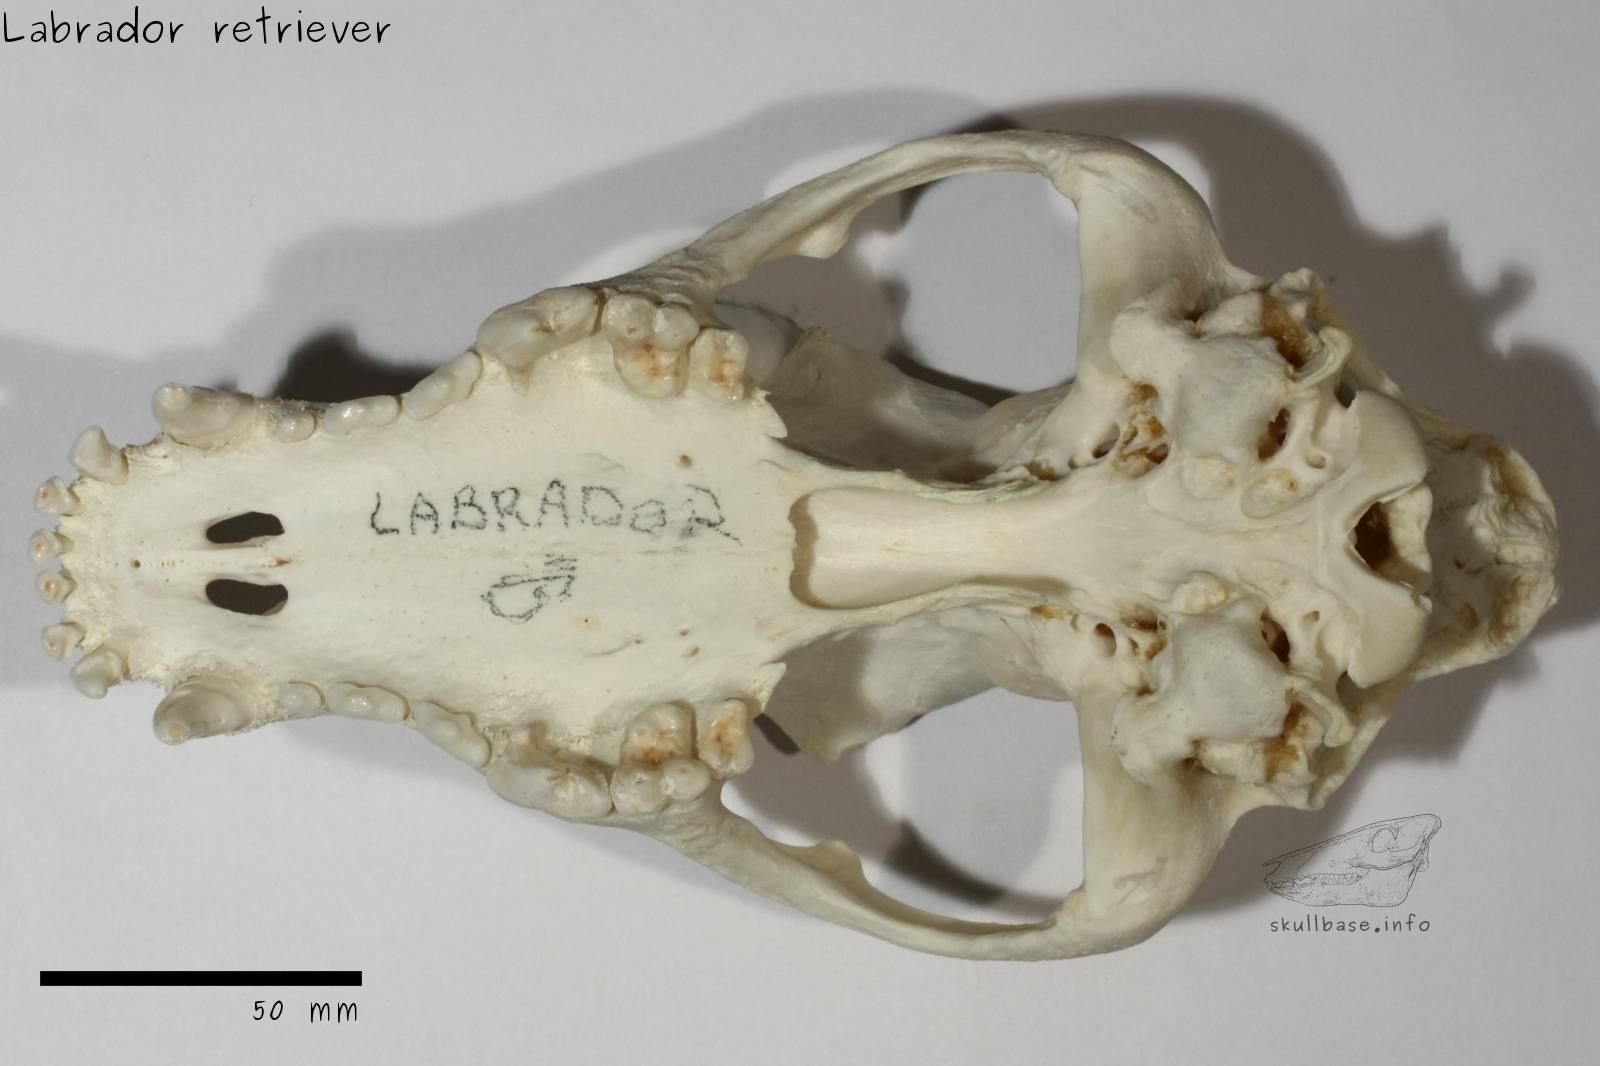 Labrador retriever (Canis lupus familiaris) skull ventral view